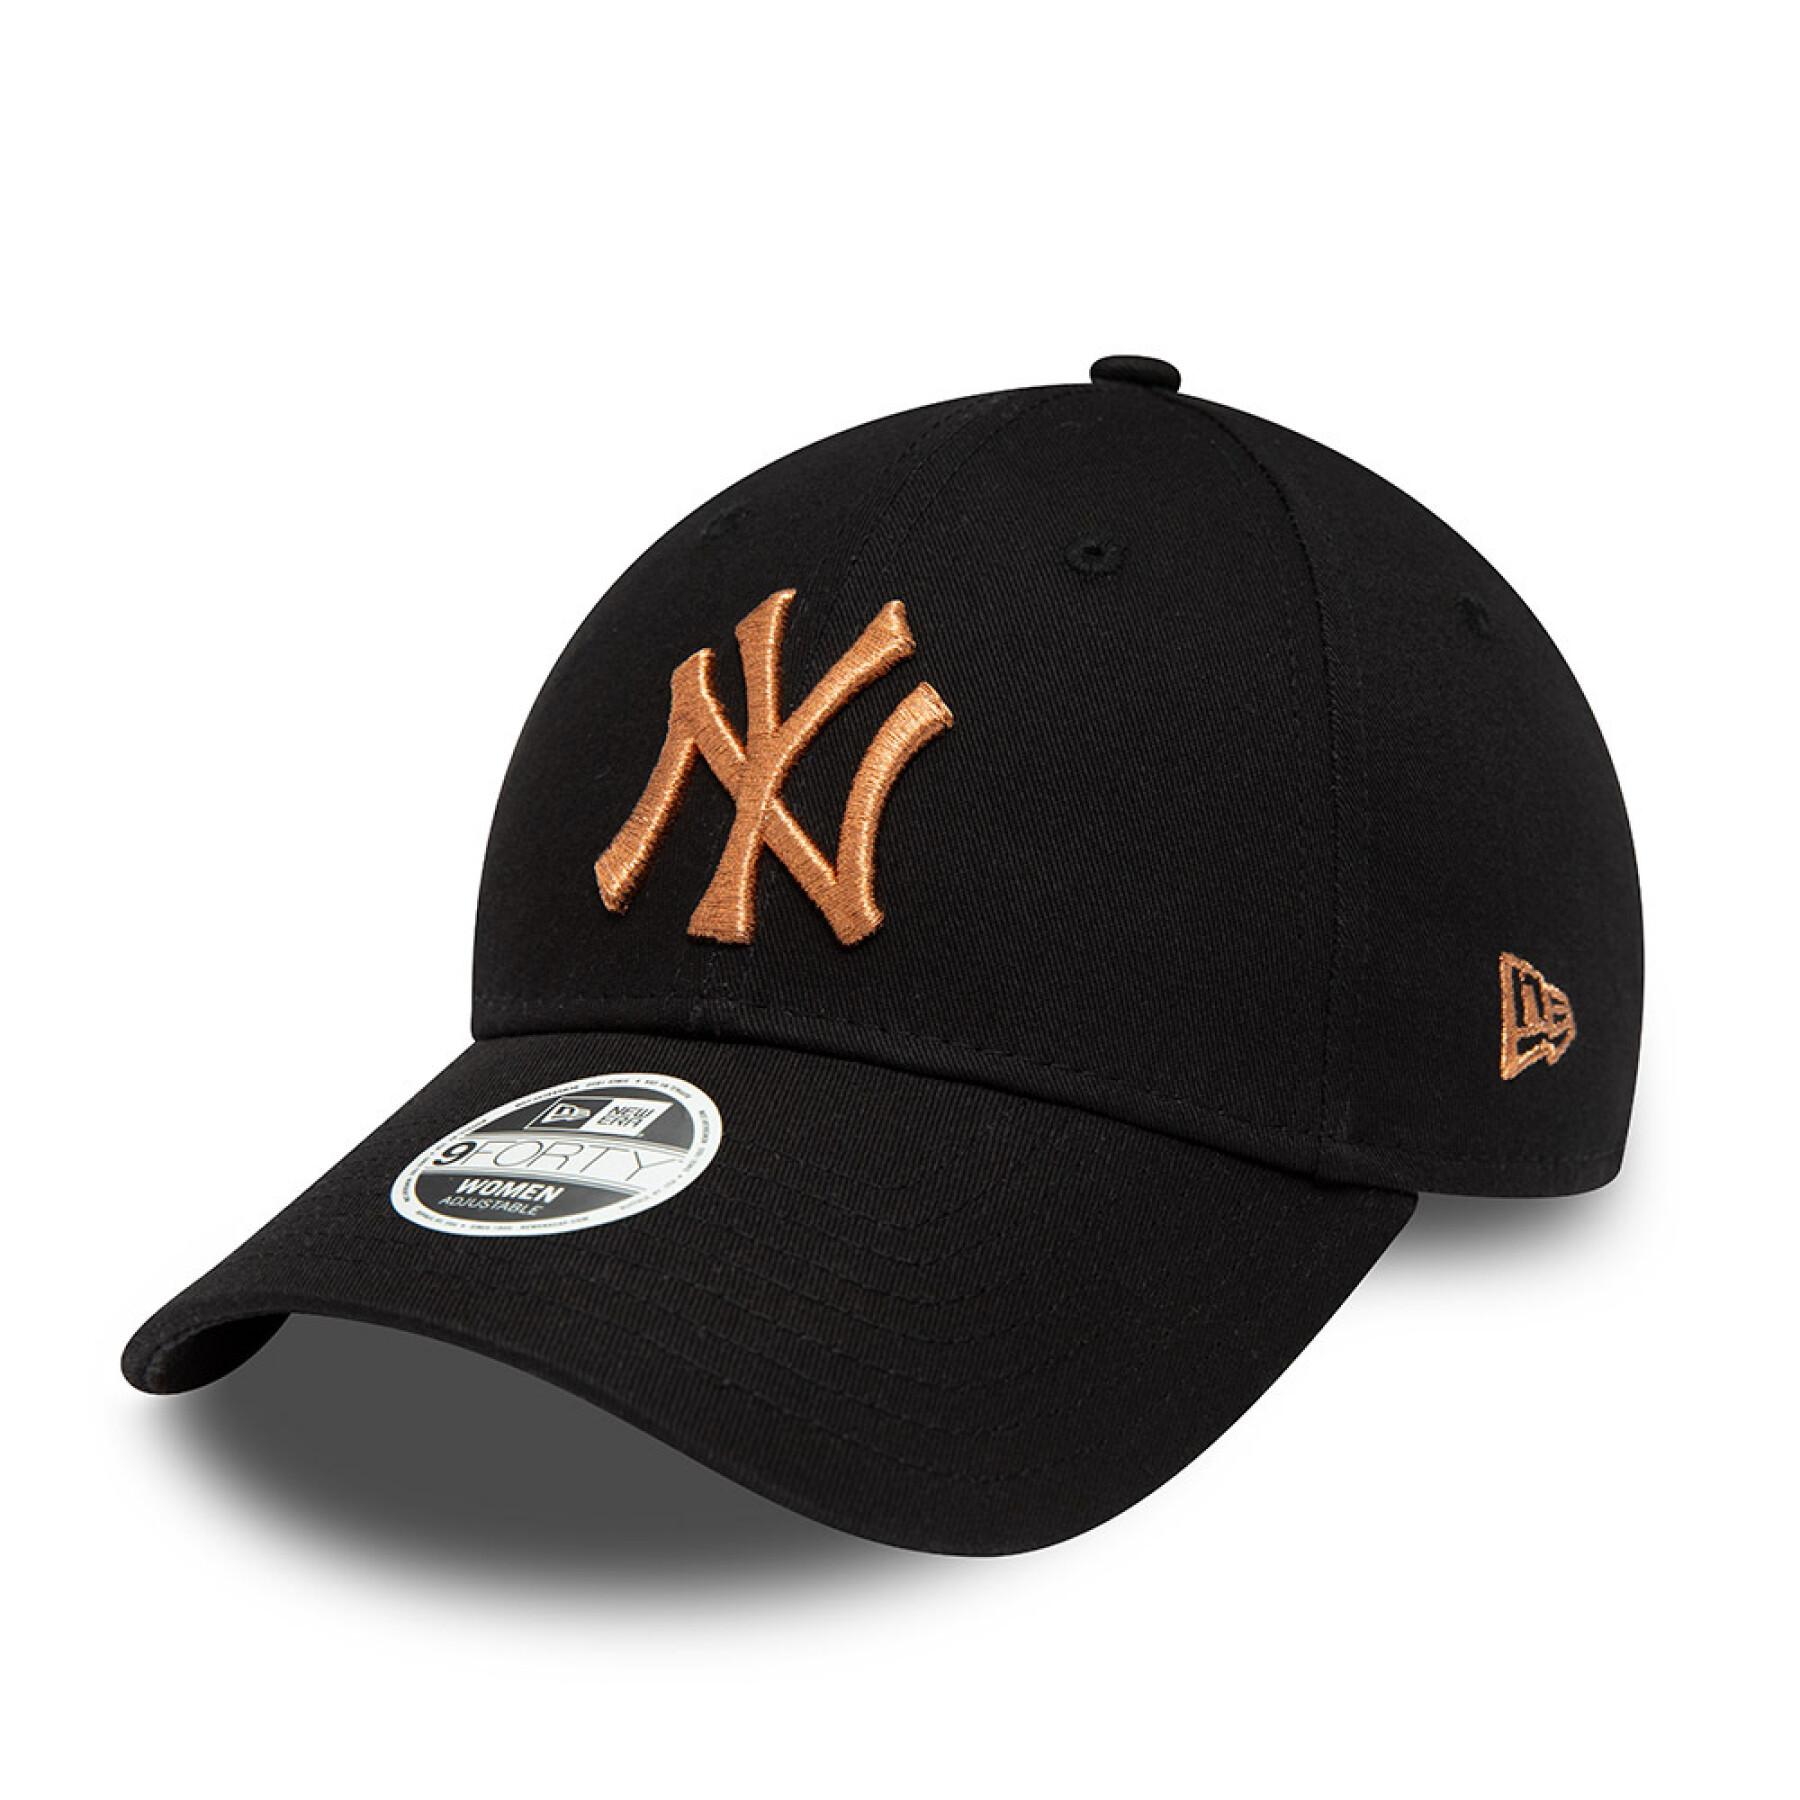 Boné feminino New York Yankees Metallic Logo